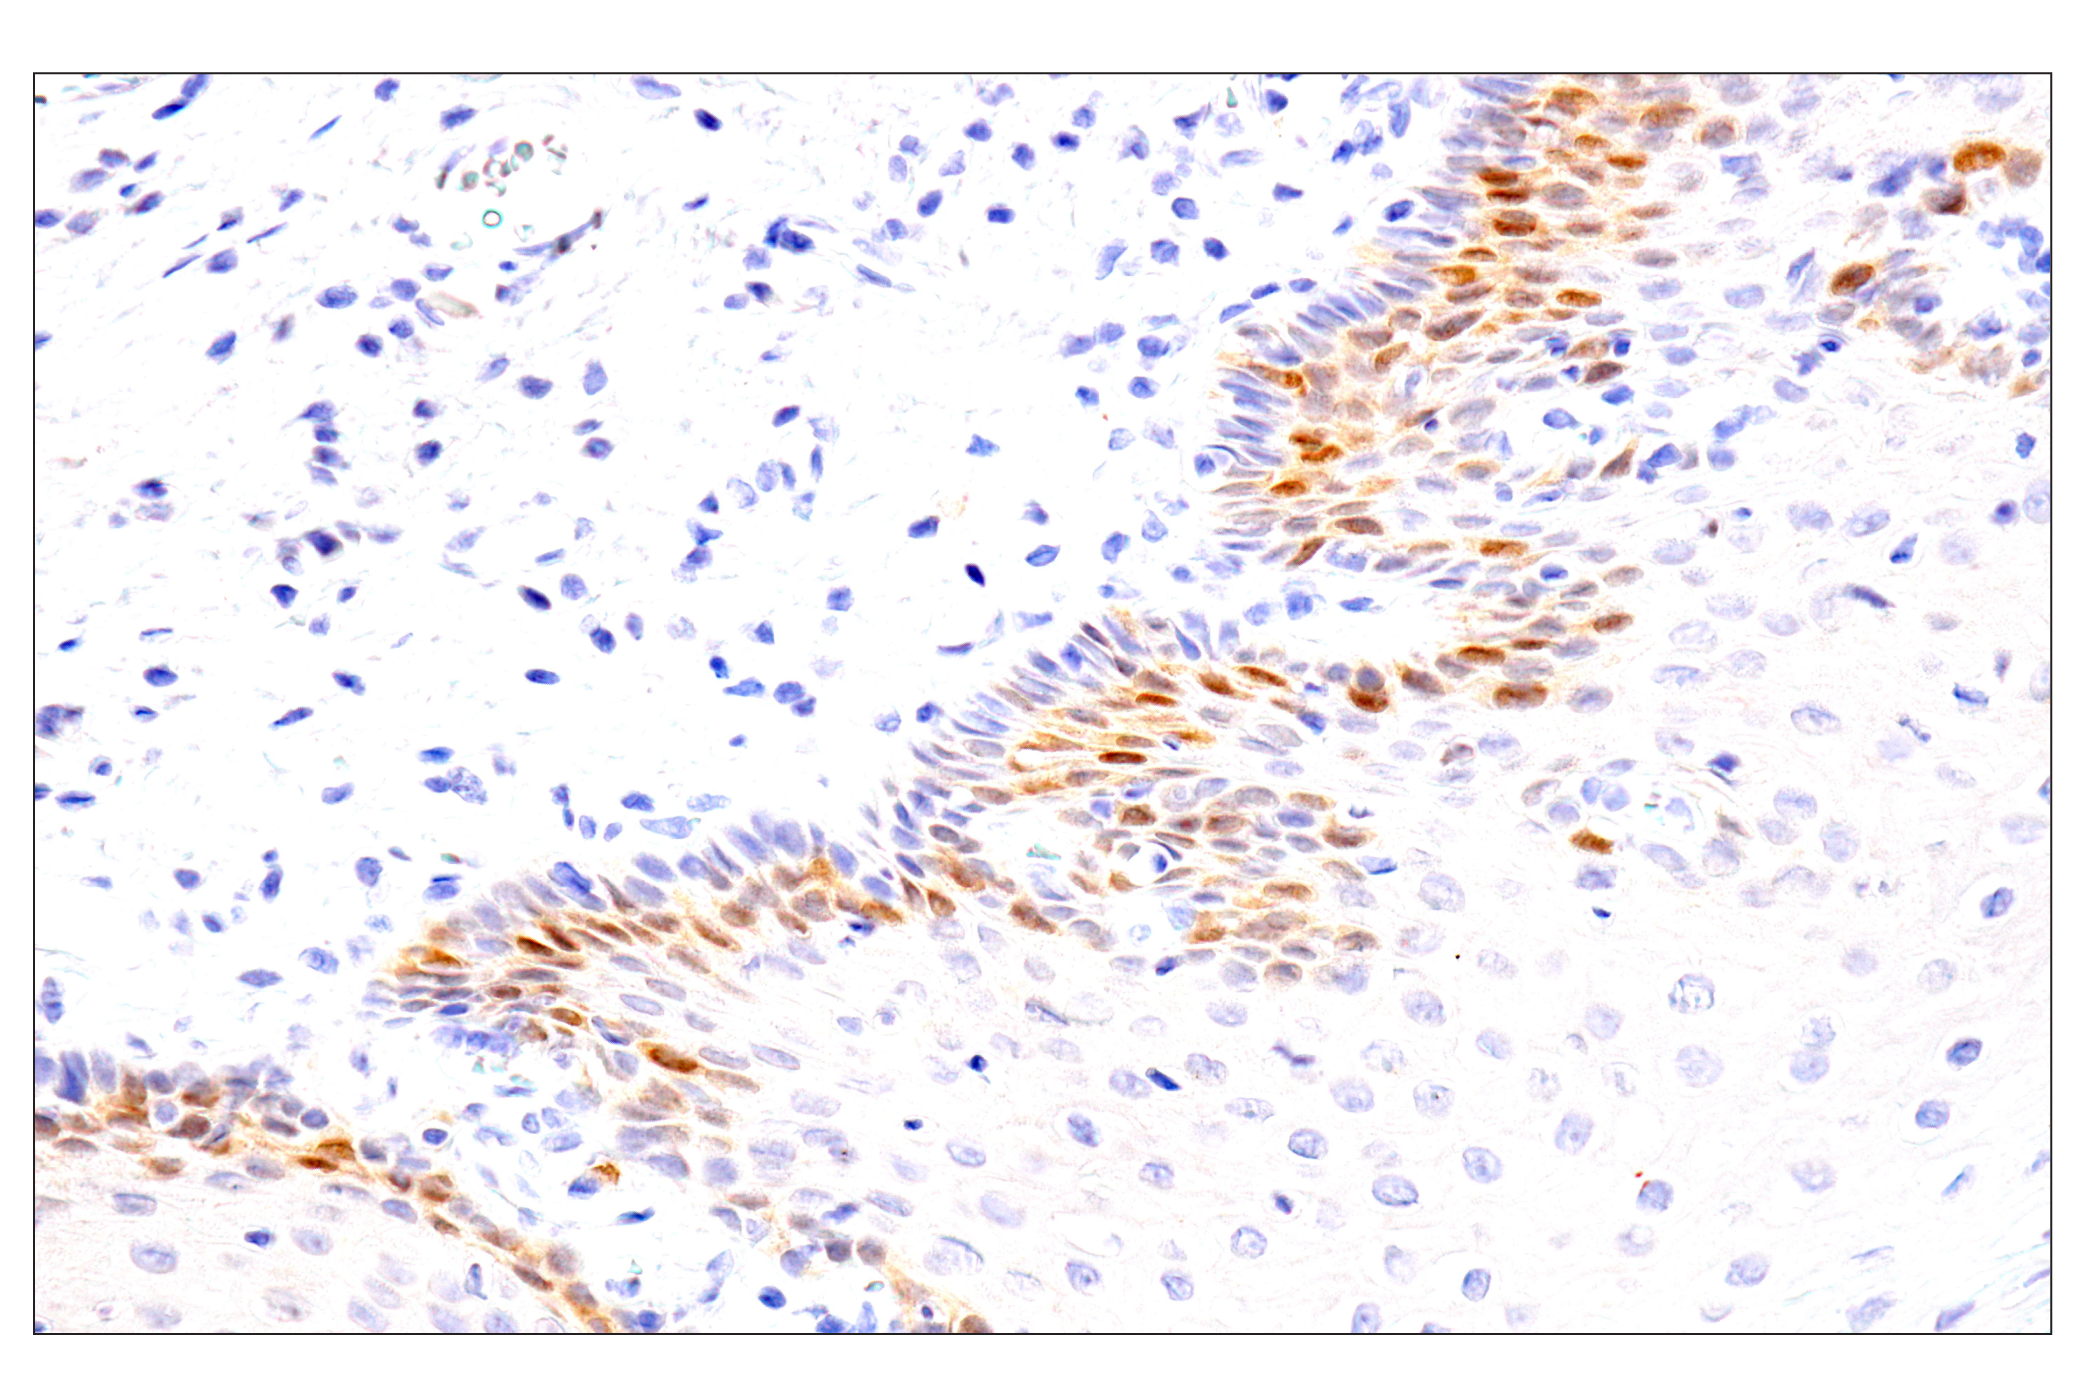  Image 39: Phospho-Chk1/2 Antibody Sampler Kit